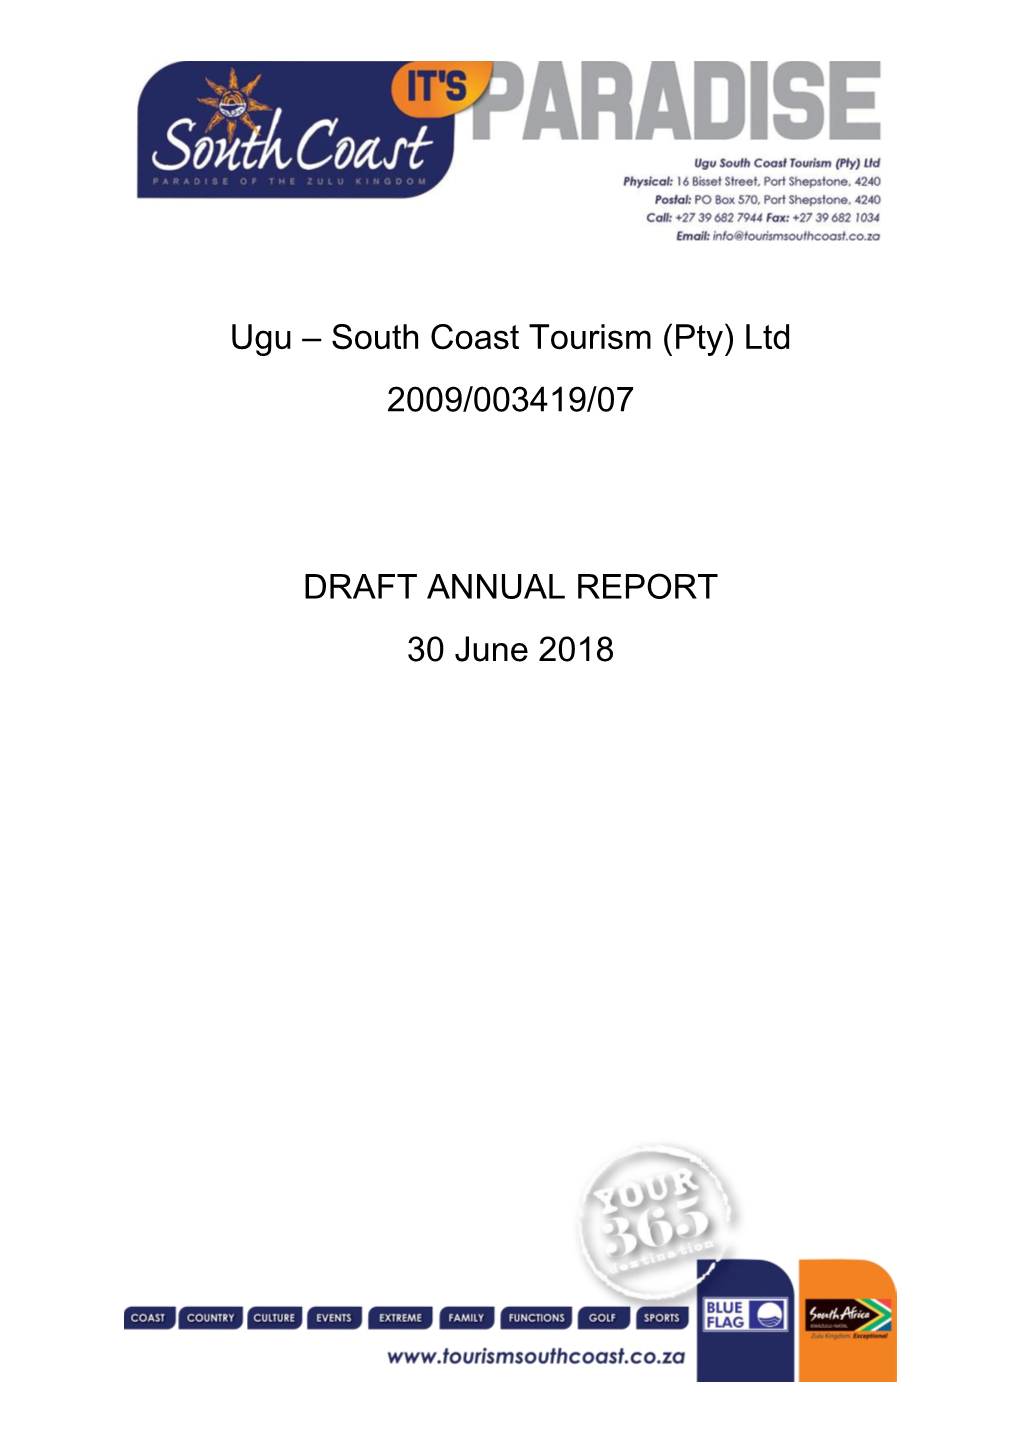 Ugu – South Coast Tourism (Pty) Ltd 2009/003419/07 DRAFT ANNUAL